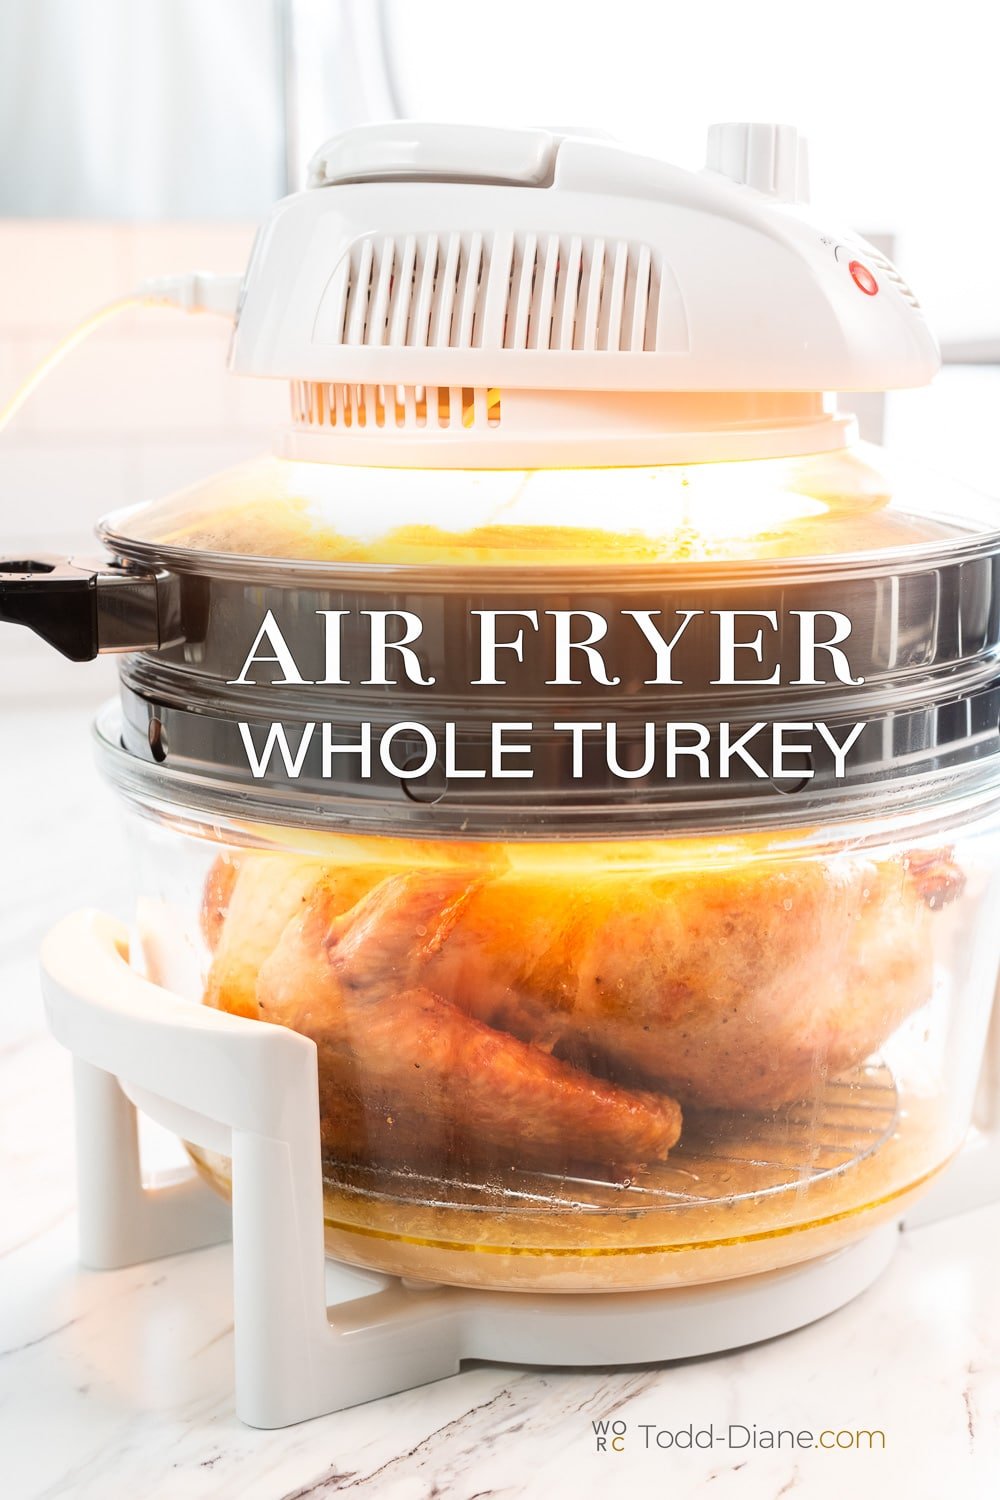 Air Fryer Whole Turkey Recipe and Gravy EASY